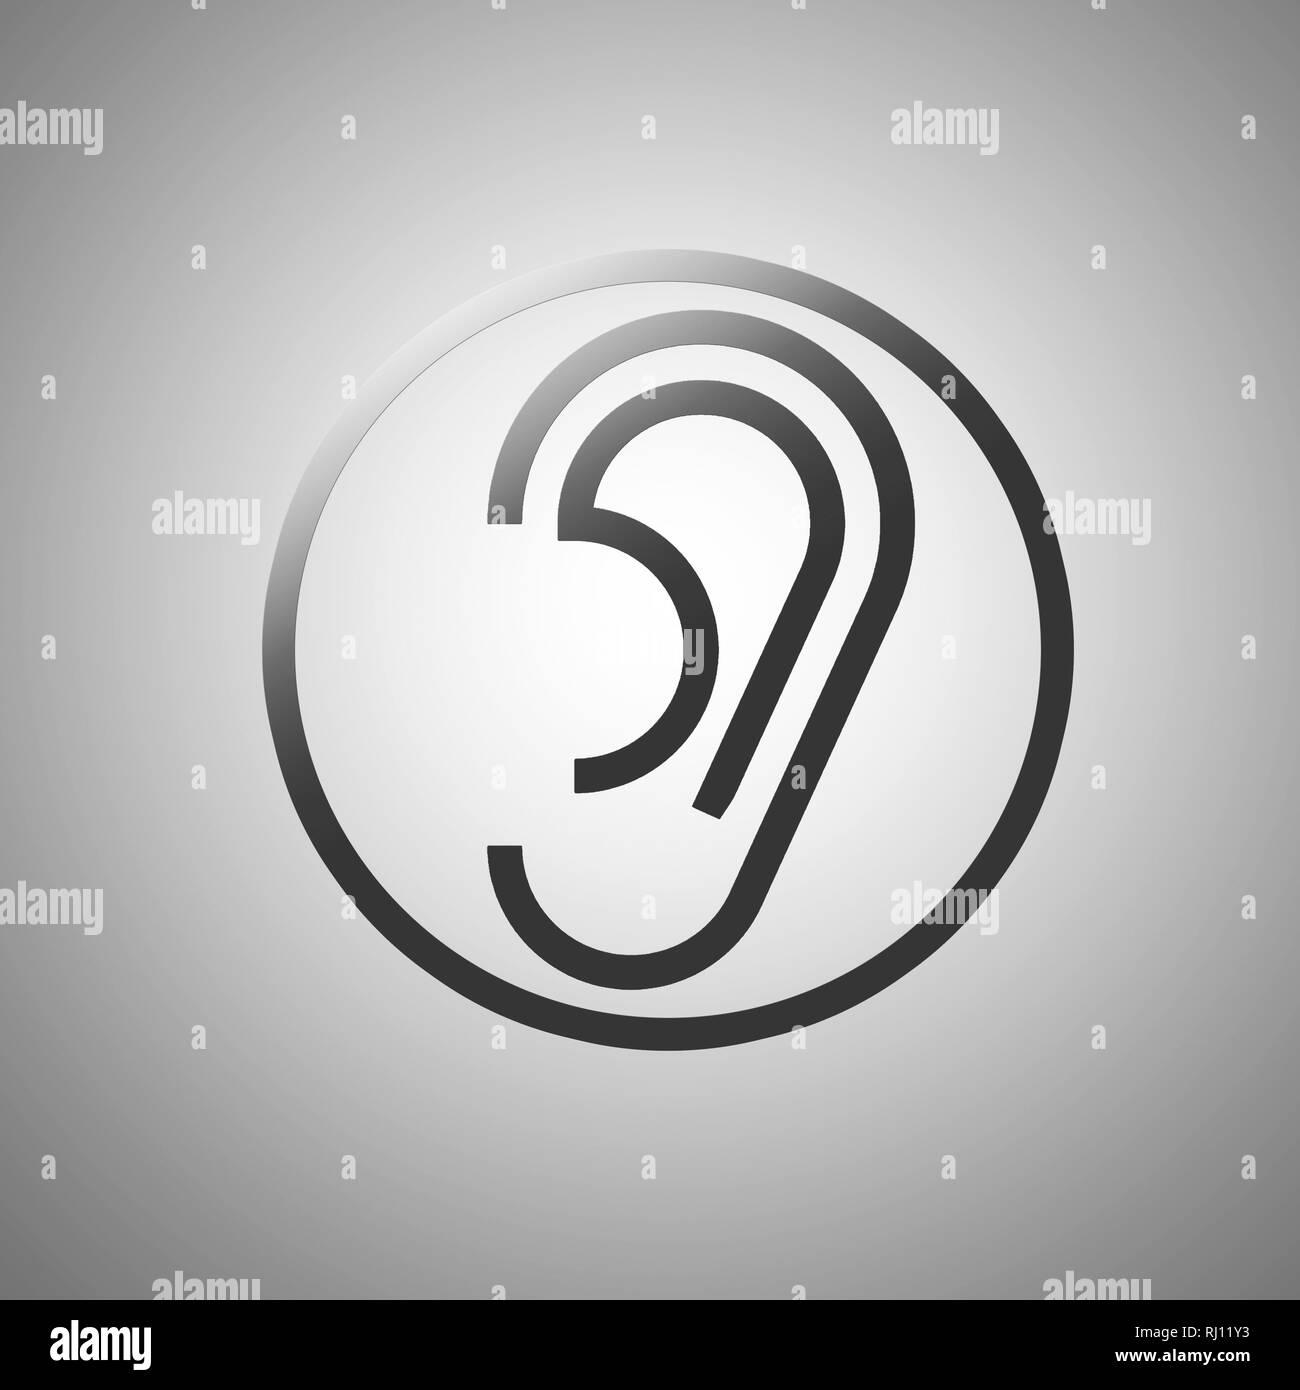 black ear icon isolated on grey background Stock Photo